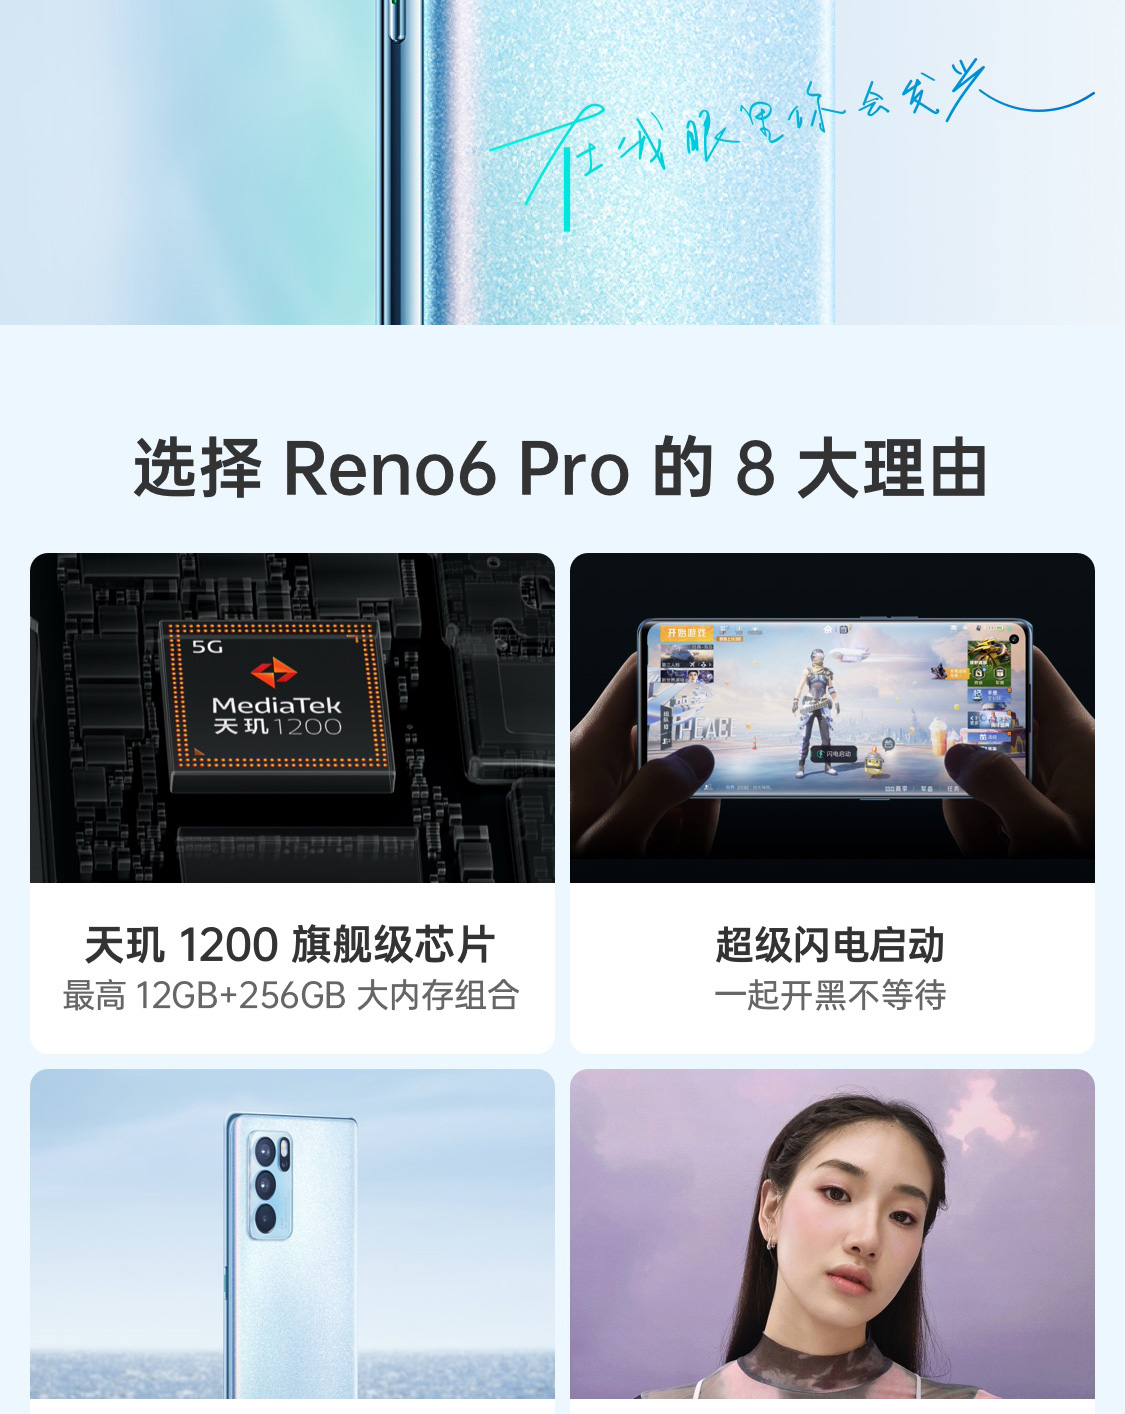 OPPO Reno6 Pro 5G  6400万四摄 65W超级闪充 夏日晴海 12+256GB大内存 轻薄拍照手机